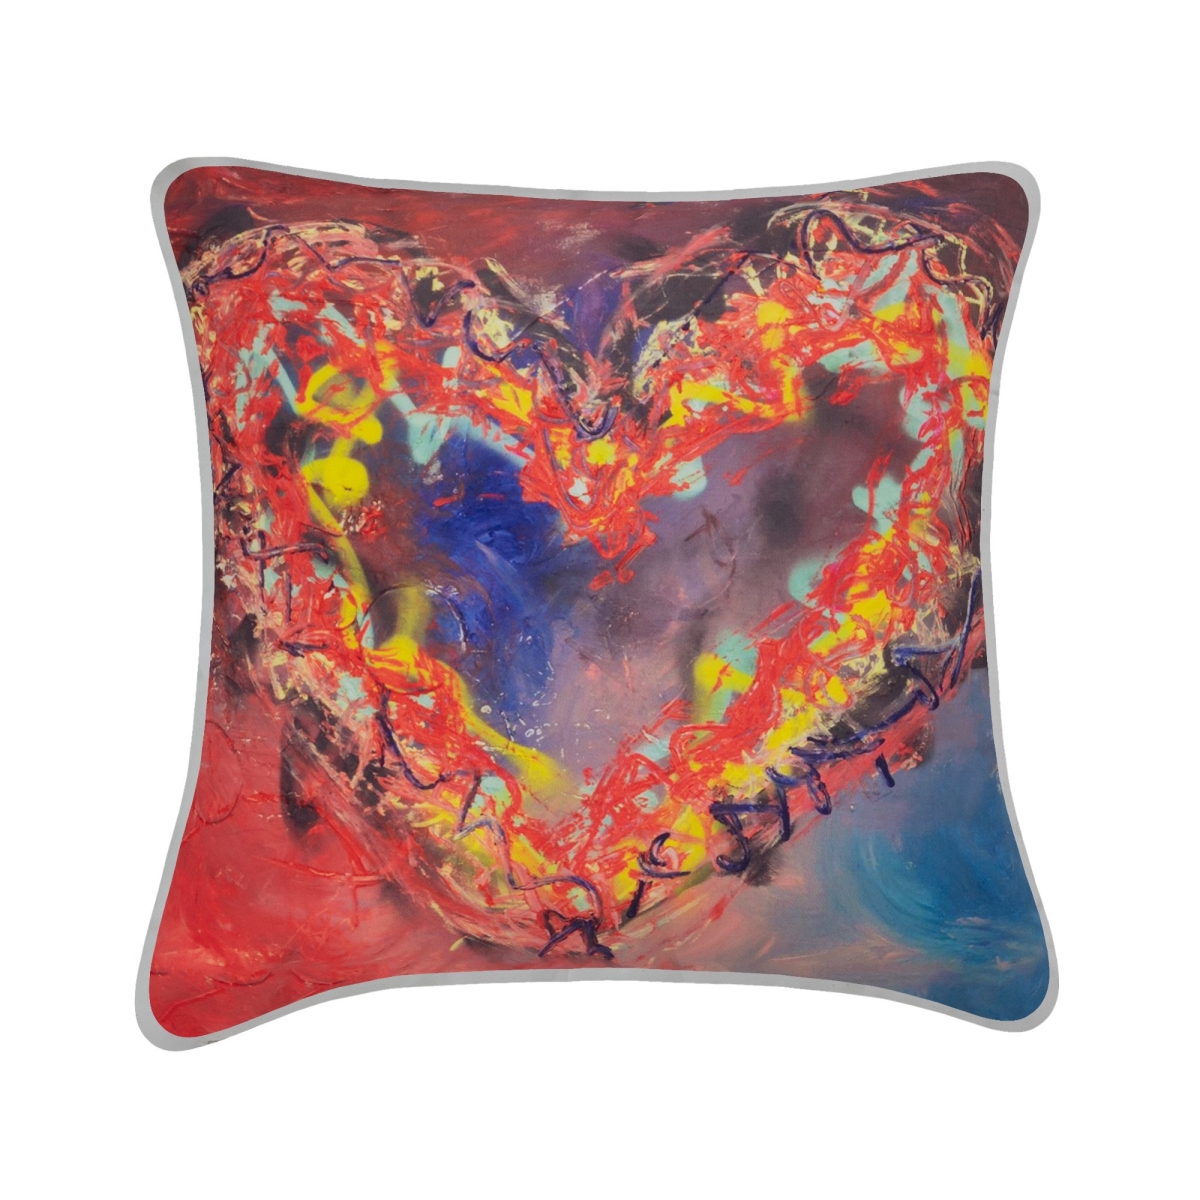 Sq-pi-jg-hebo-1818 18 X 18 In. Jessica Gorlicky Heart Boudoir Decorative Cushion - 100 Percent Polyester